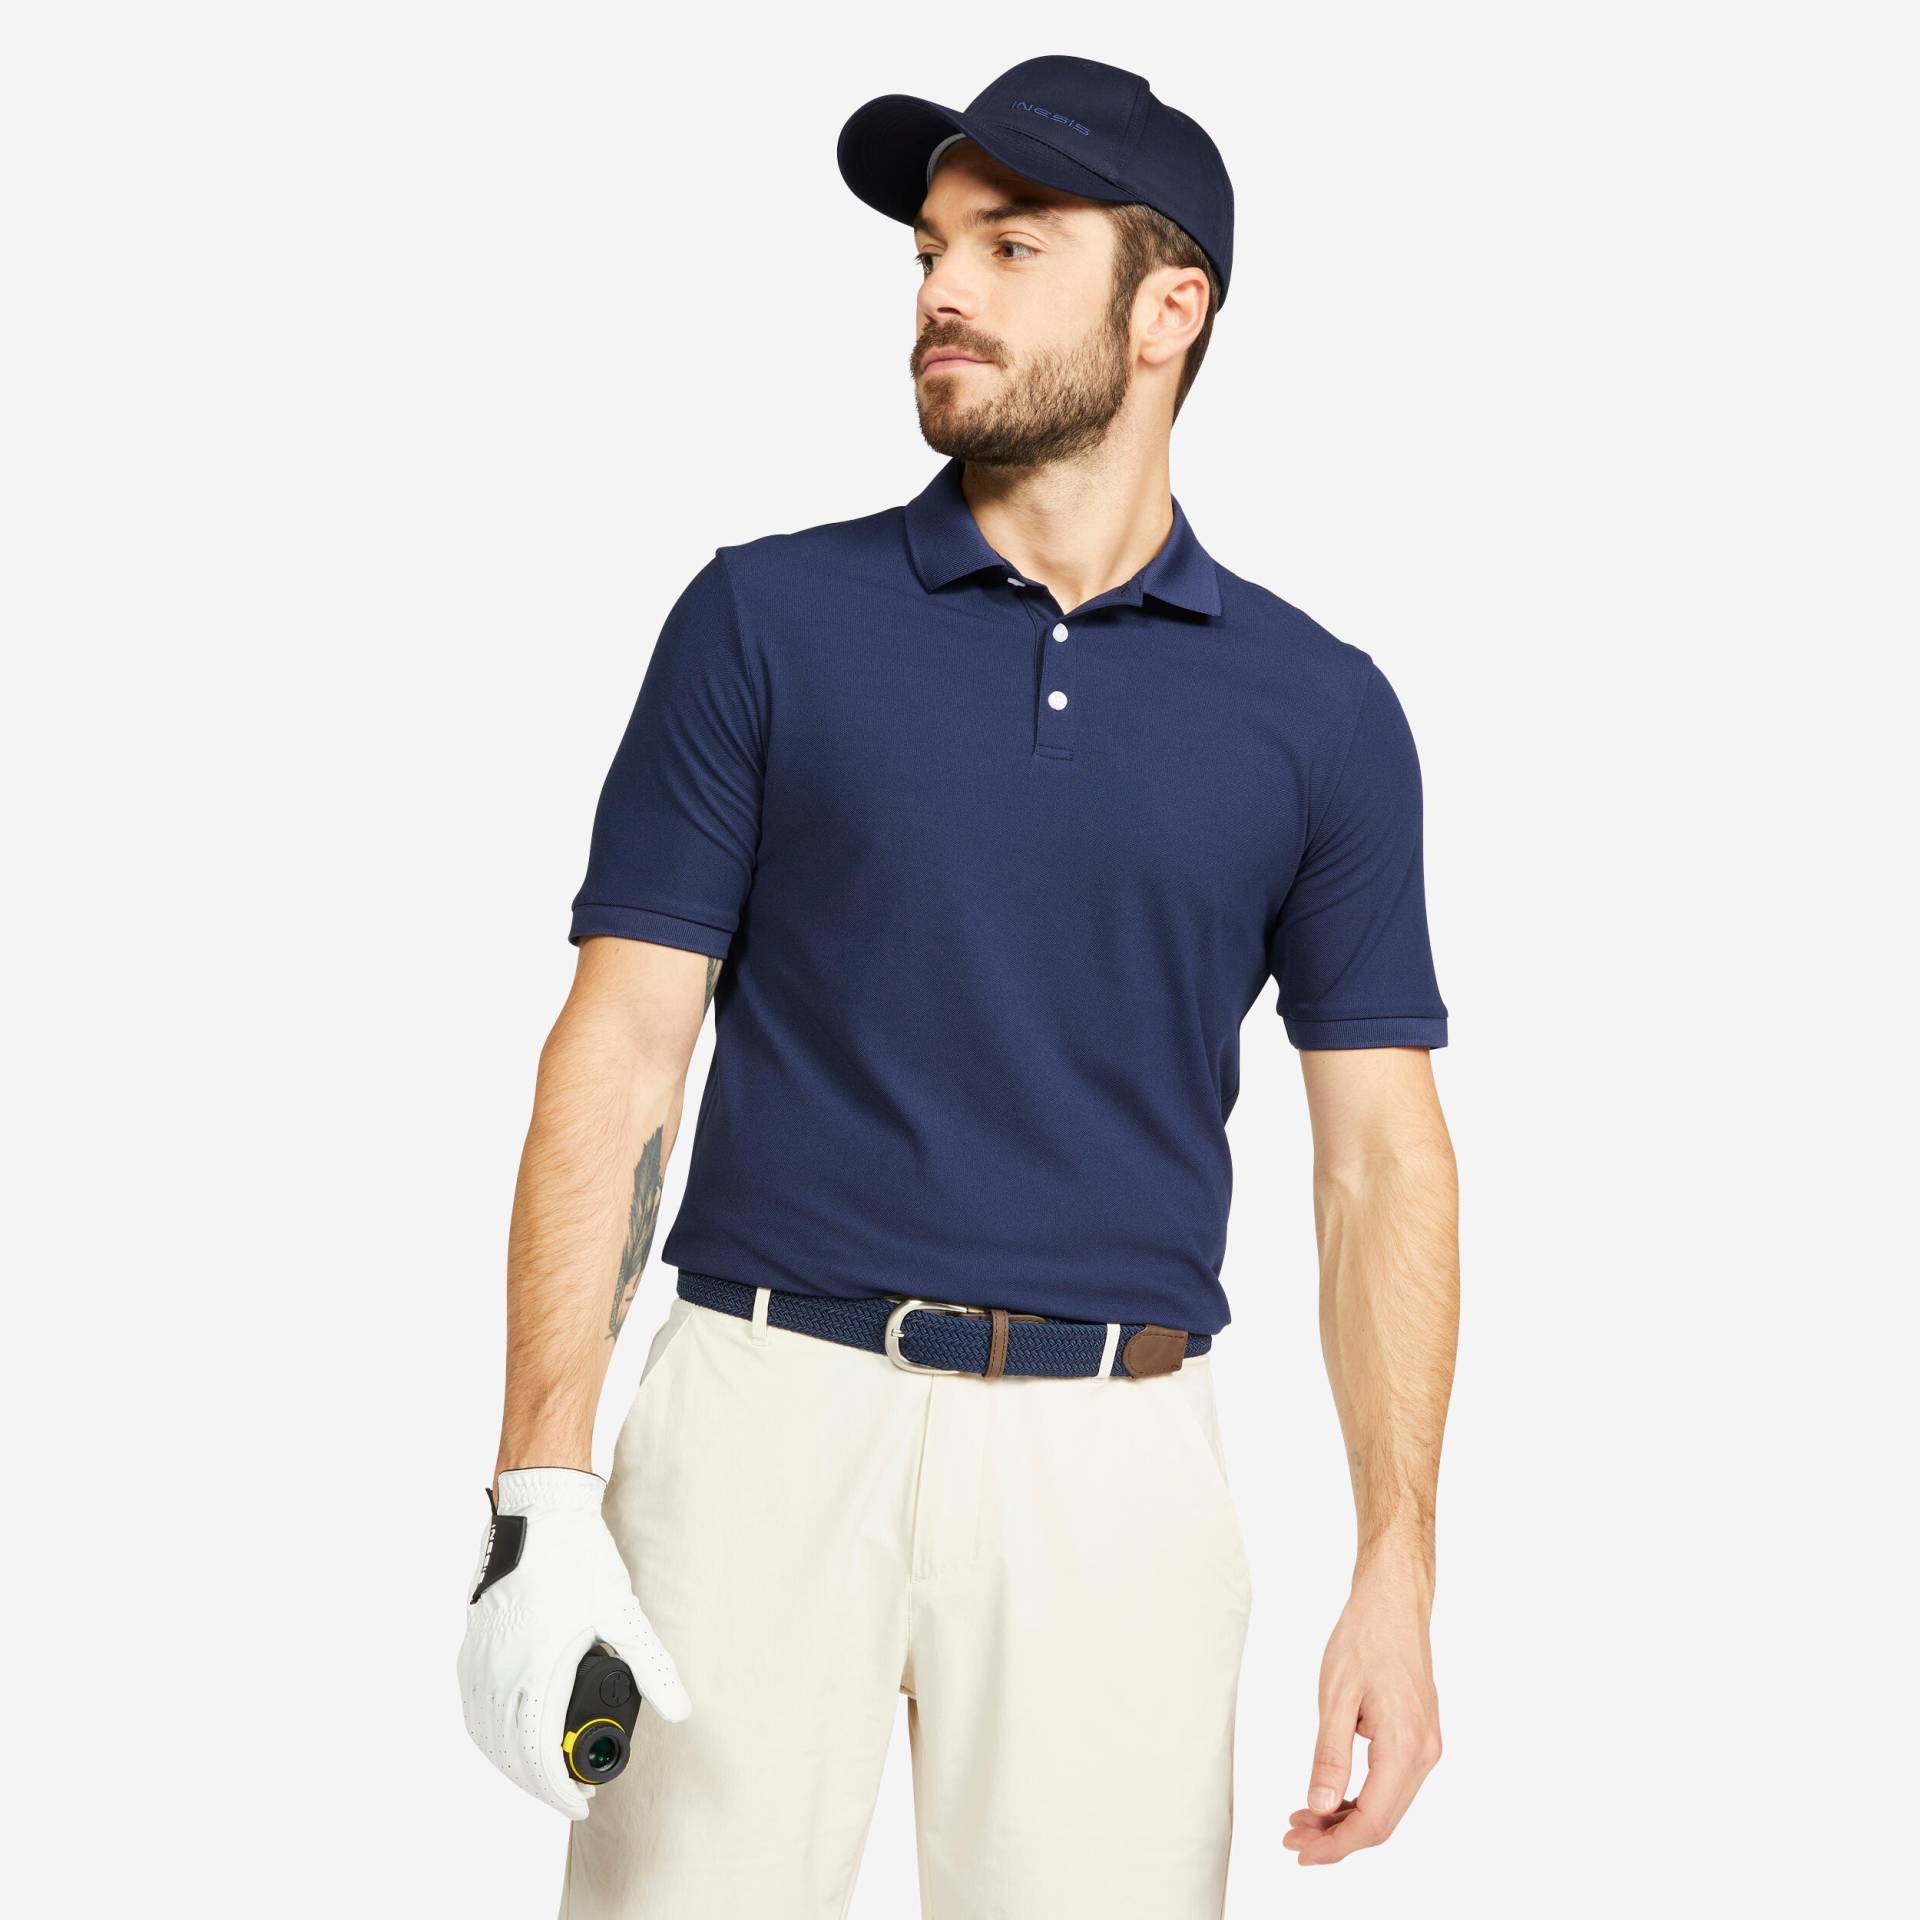 Herren Golf Poloshirt kurzarm - WW500 marineblau von INESIS